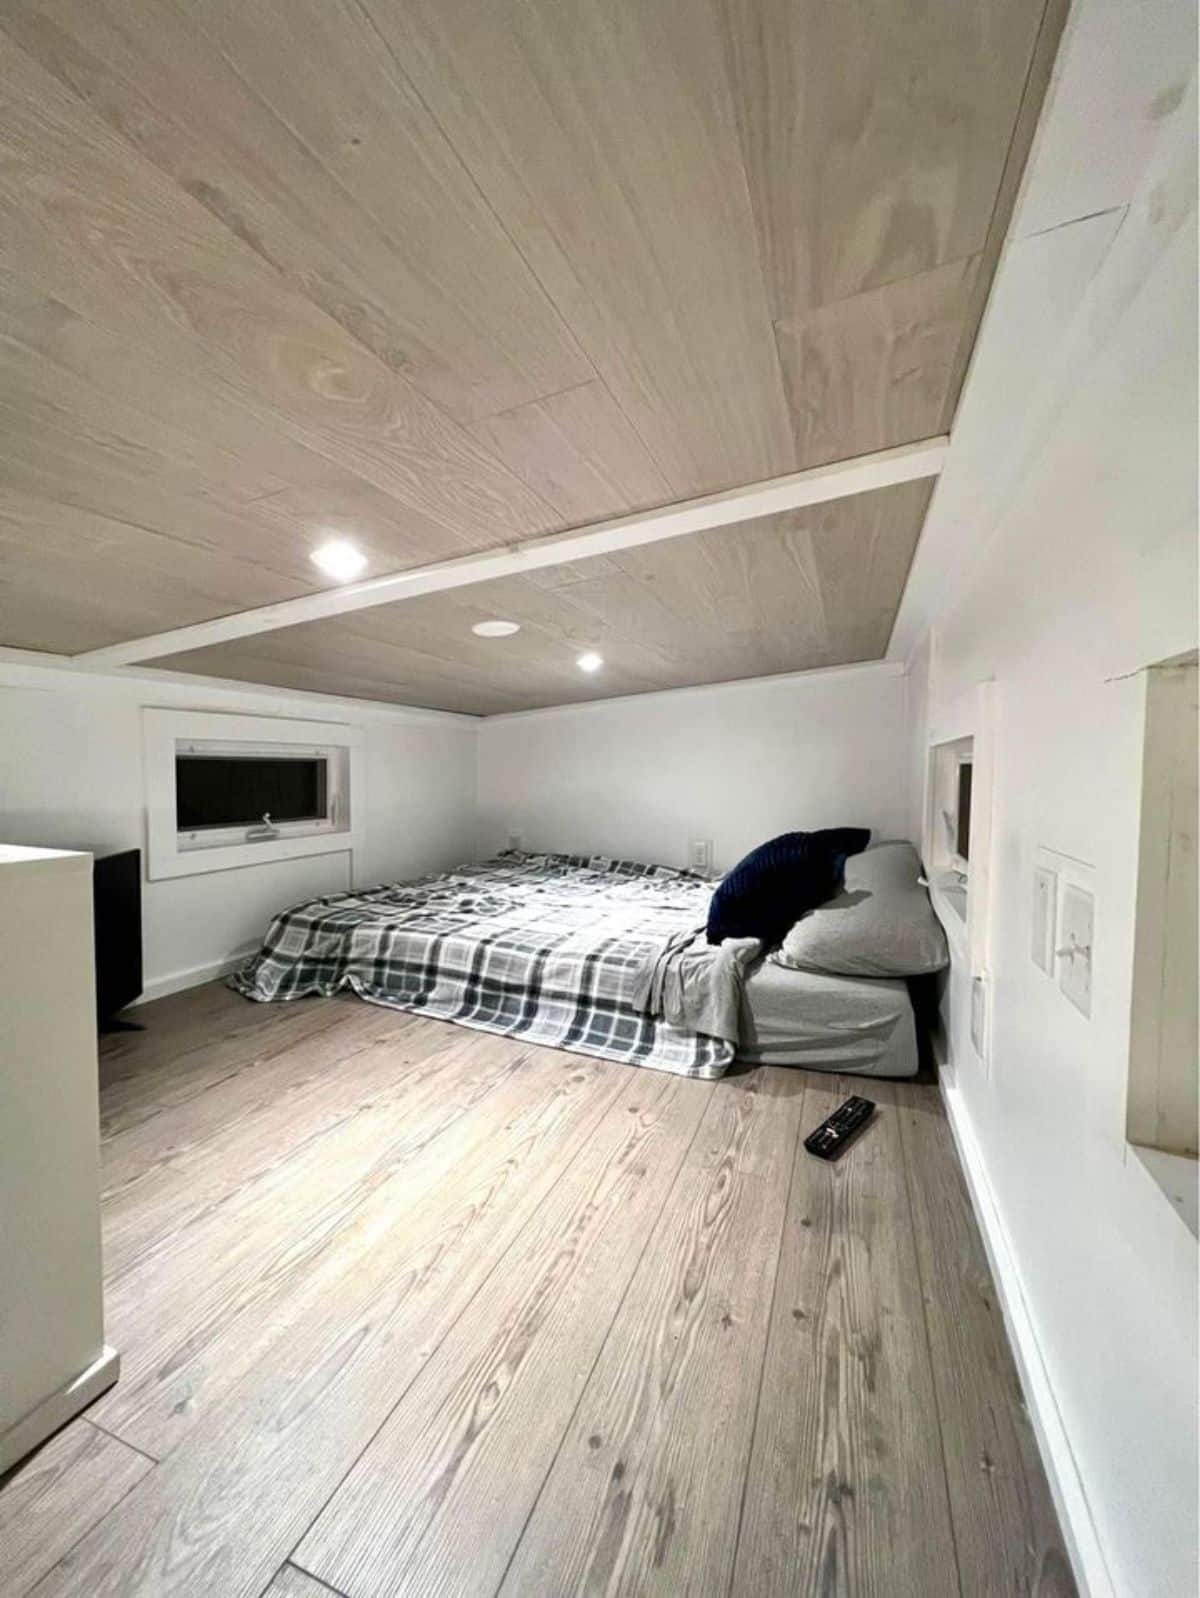 Loft bedroom is very comfortable yet very spacious